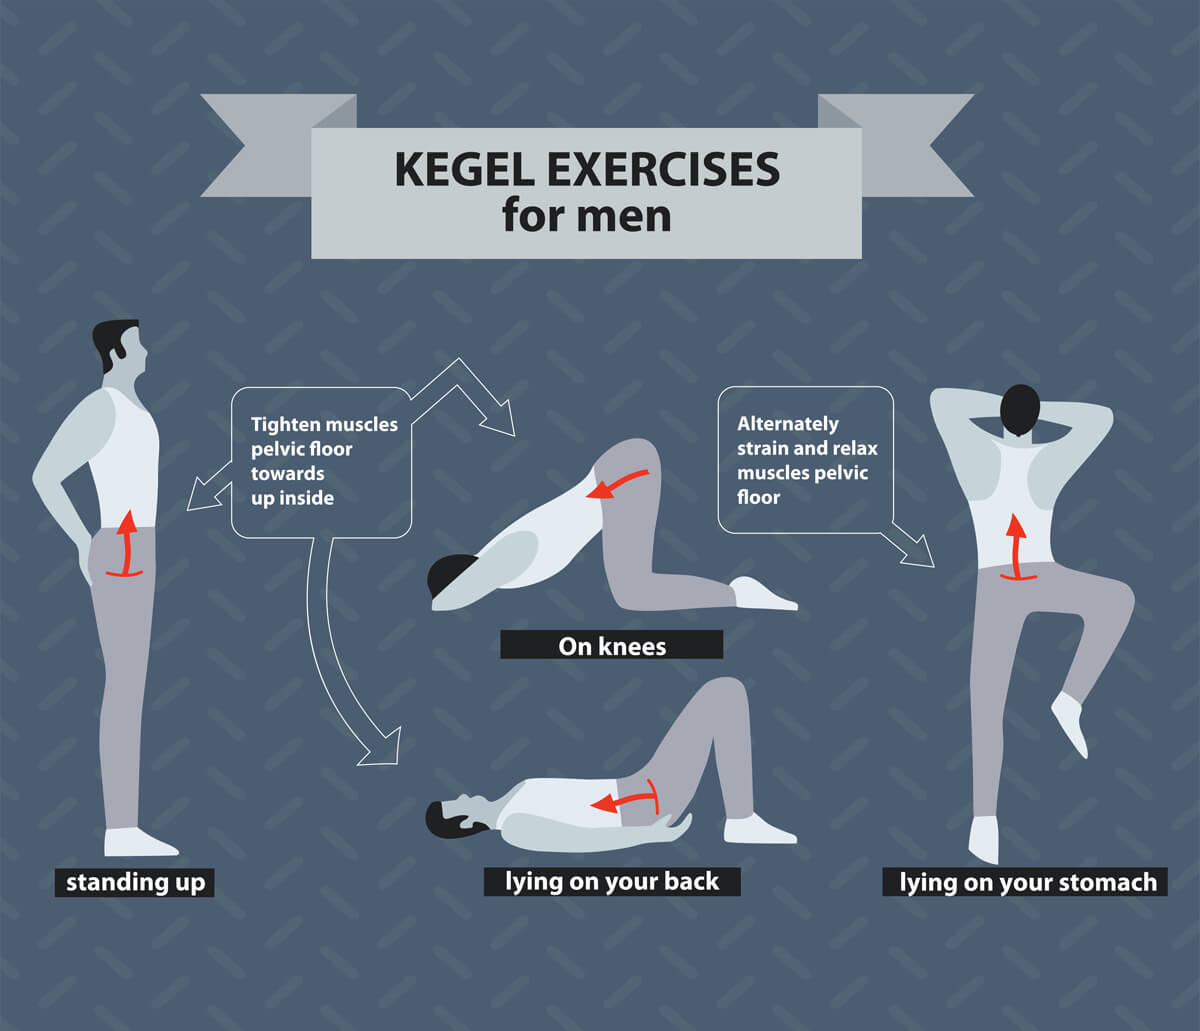 How Kegel Exercises can Benefit Men? by exercisesformen - Issuu